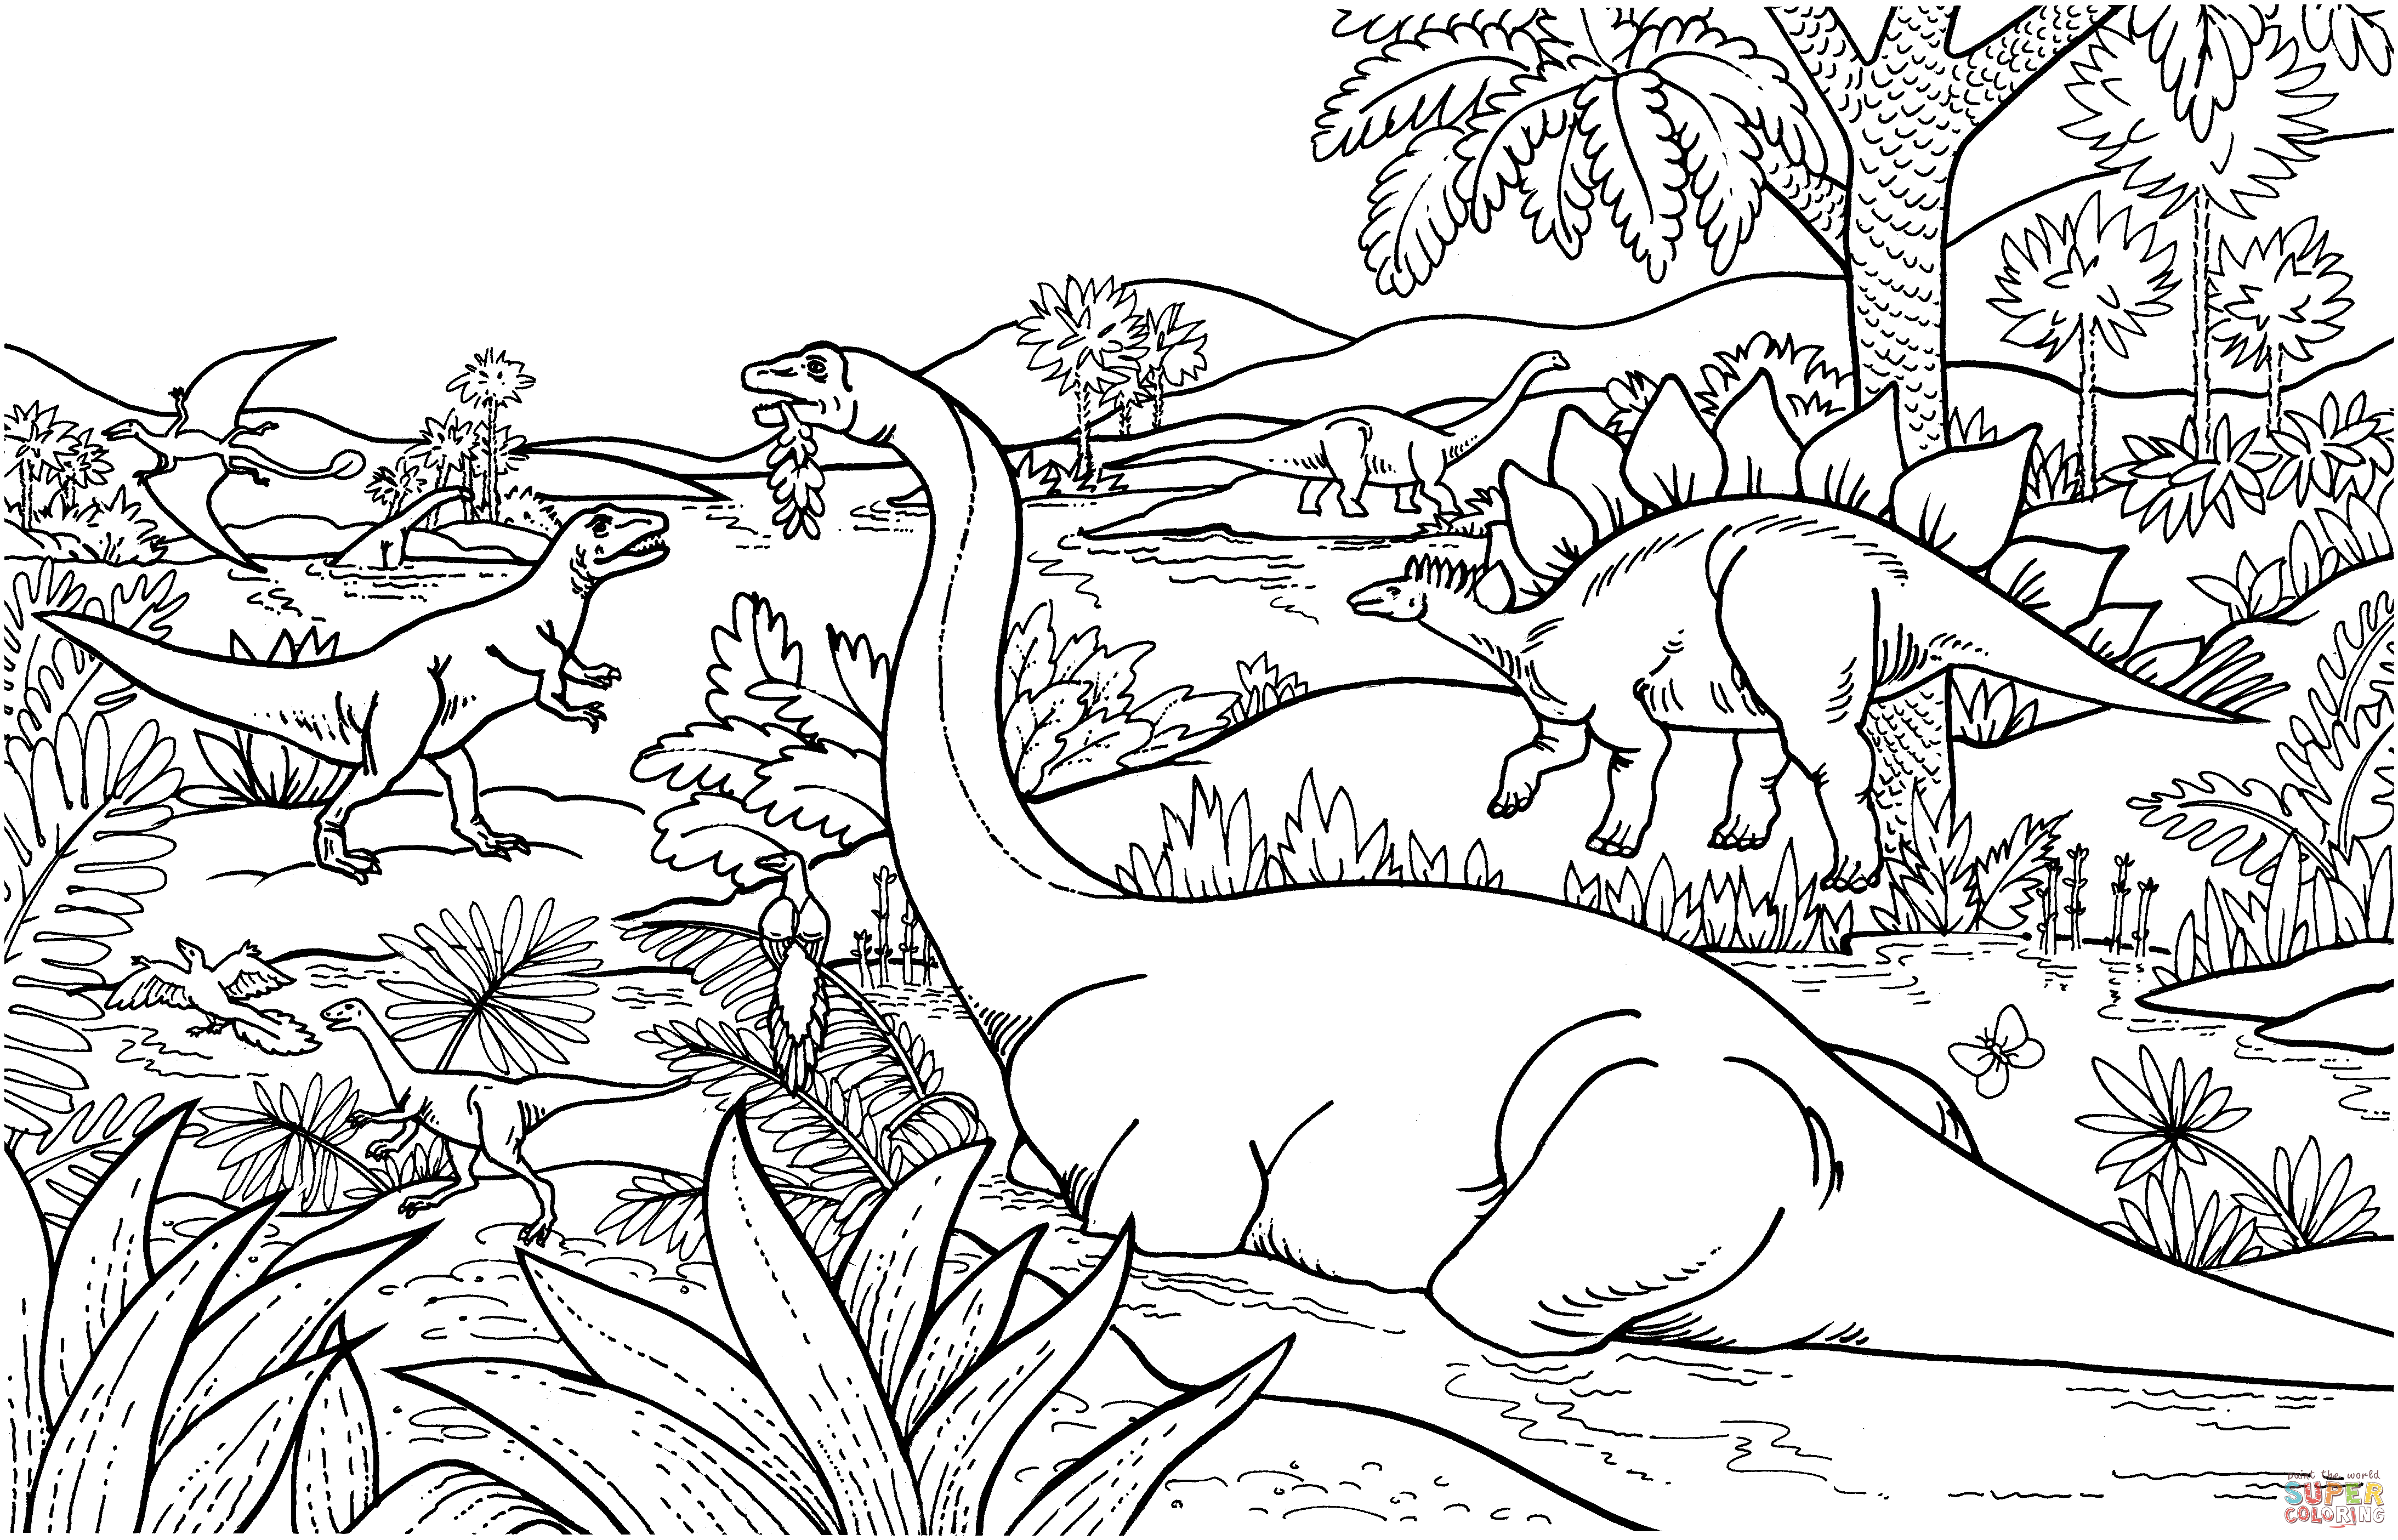 Онлайн Разукрашки Динозавры